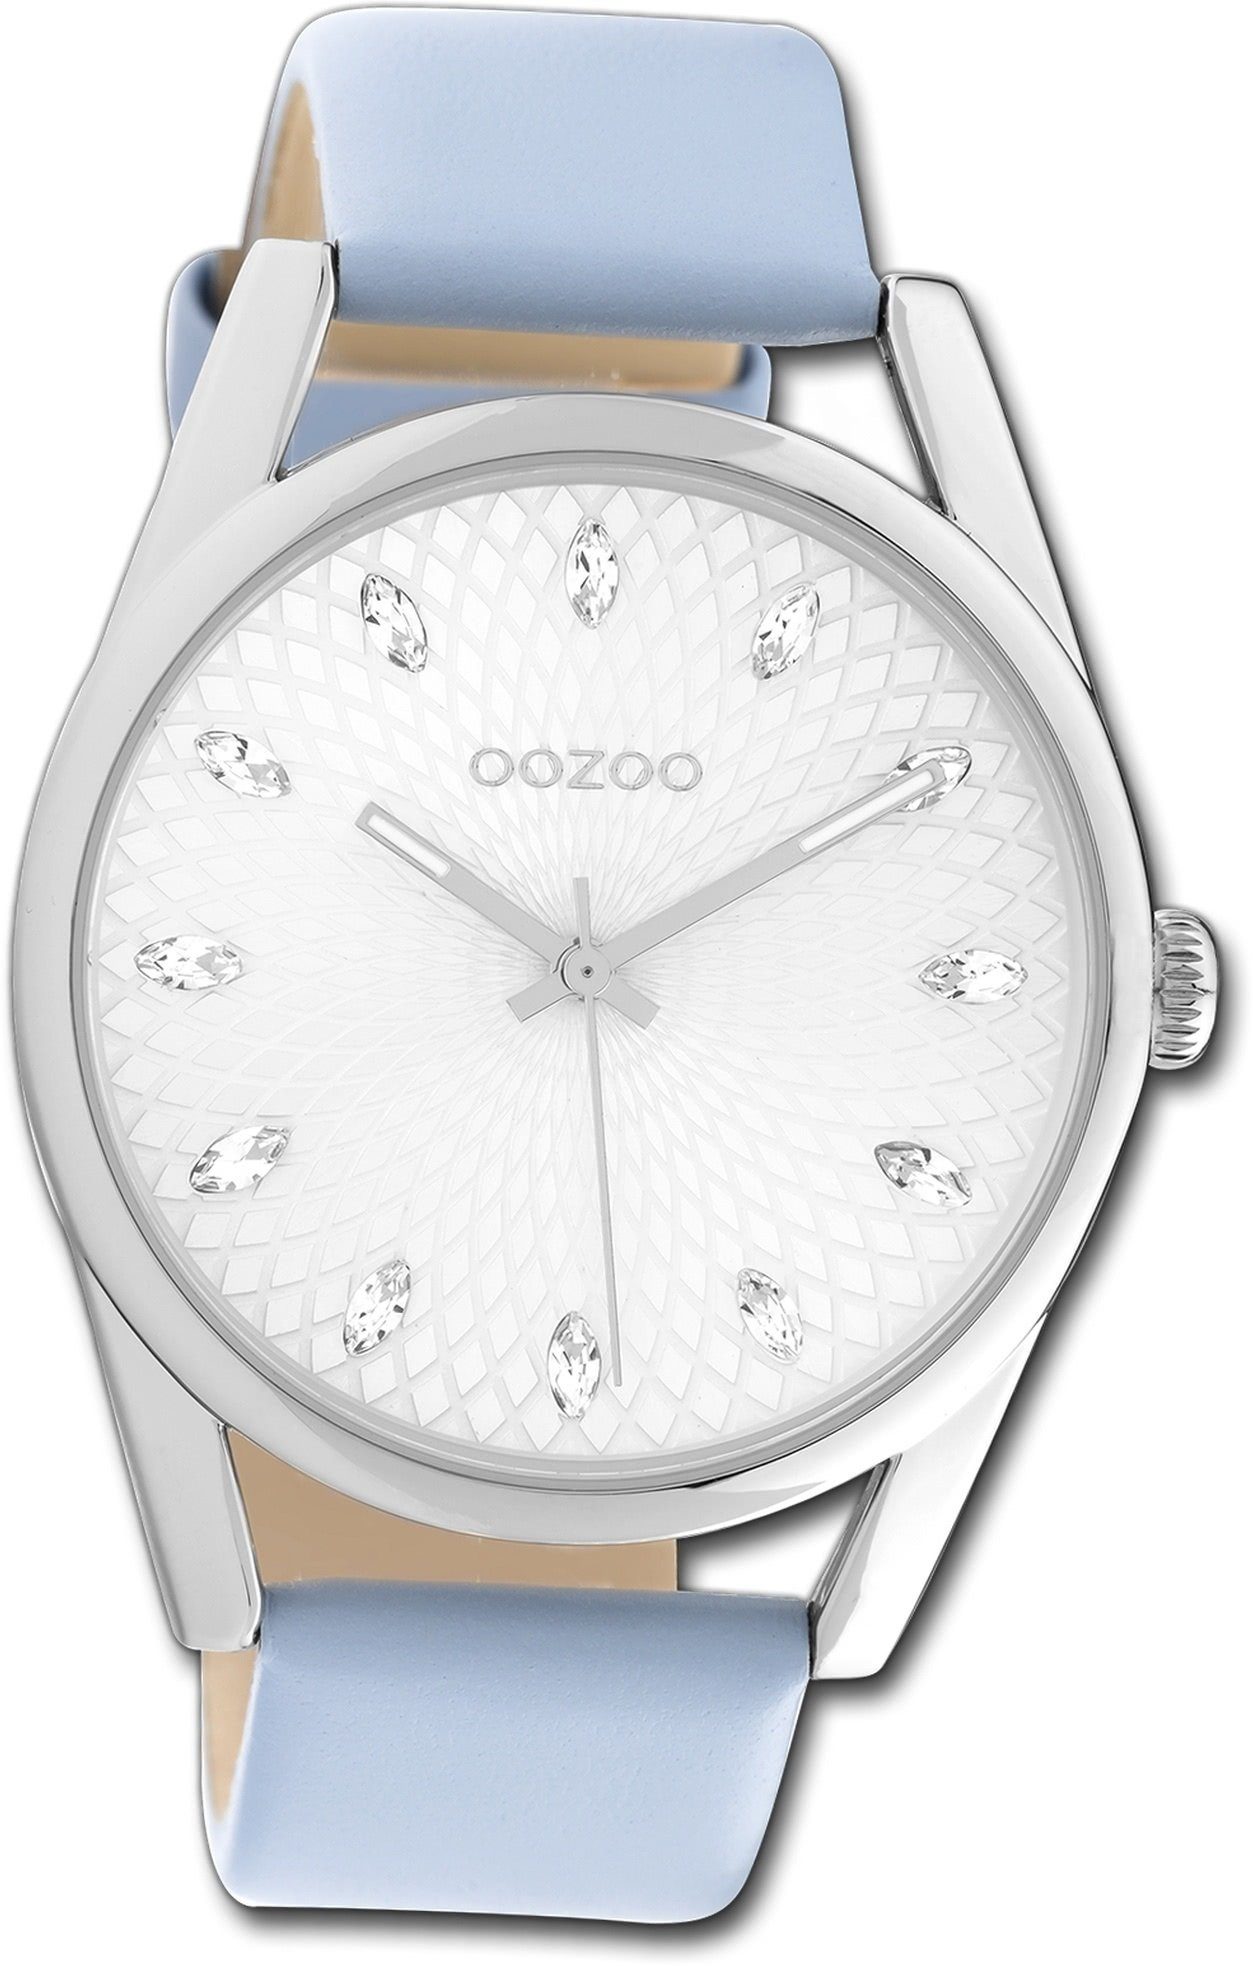 OOZOO Quarzuhr blau, 45mm) rundes groß Gehäuse, Timepieces, Damen Damenuhr Lederarmband Armbanduhr (ca. Oozoo